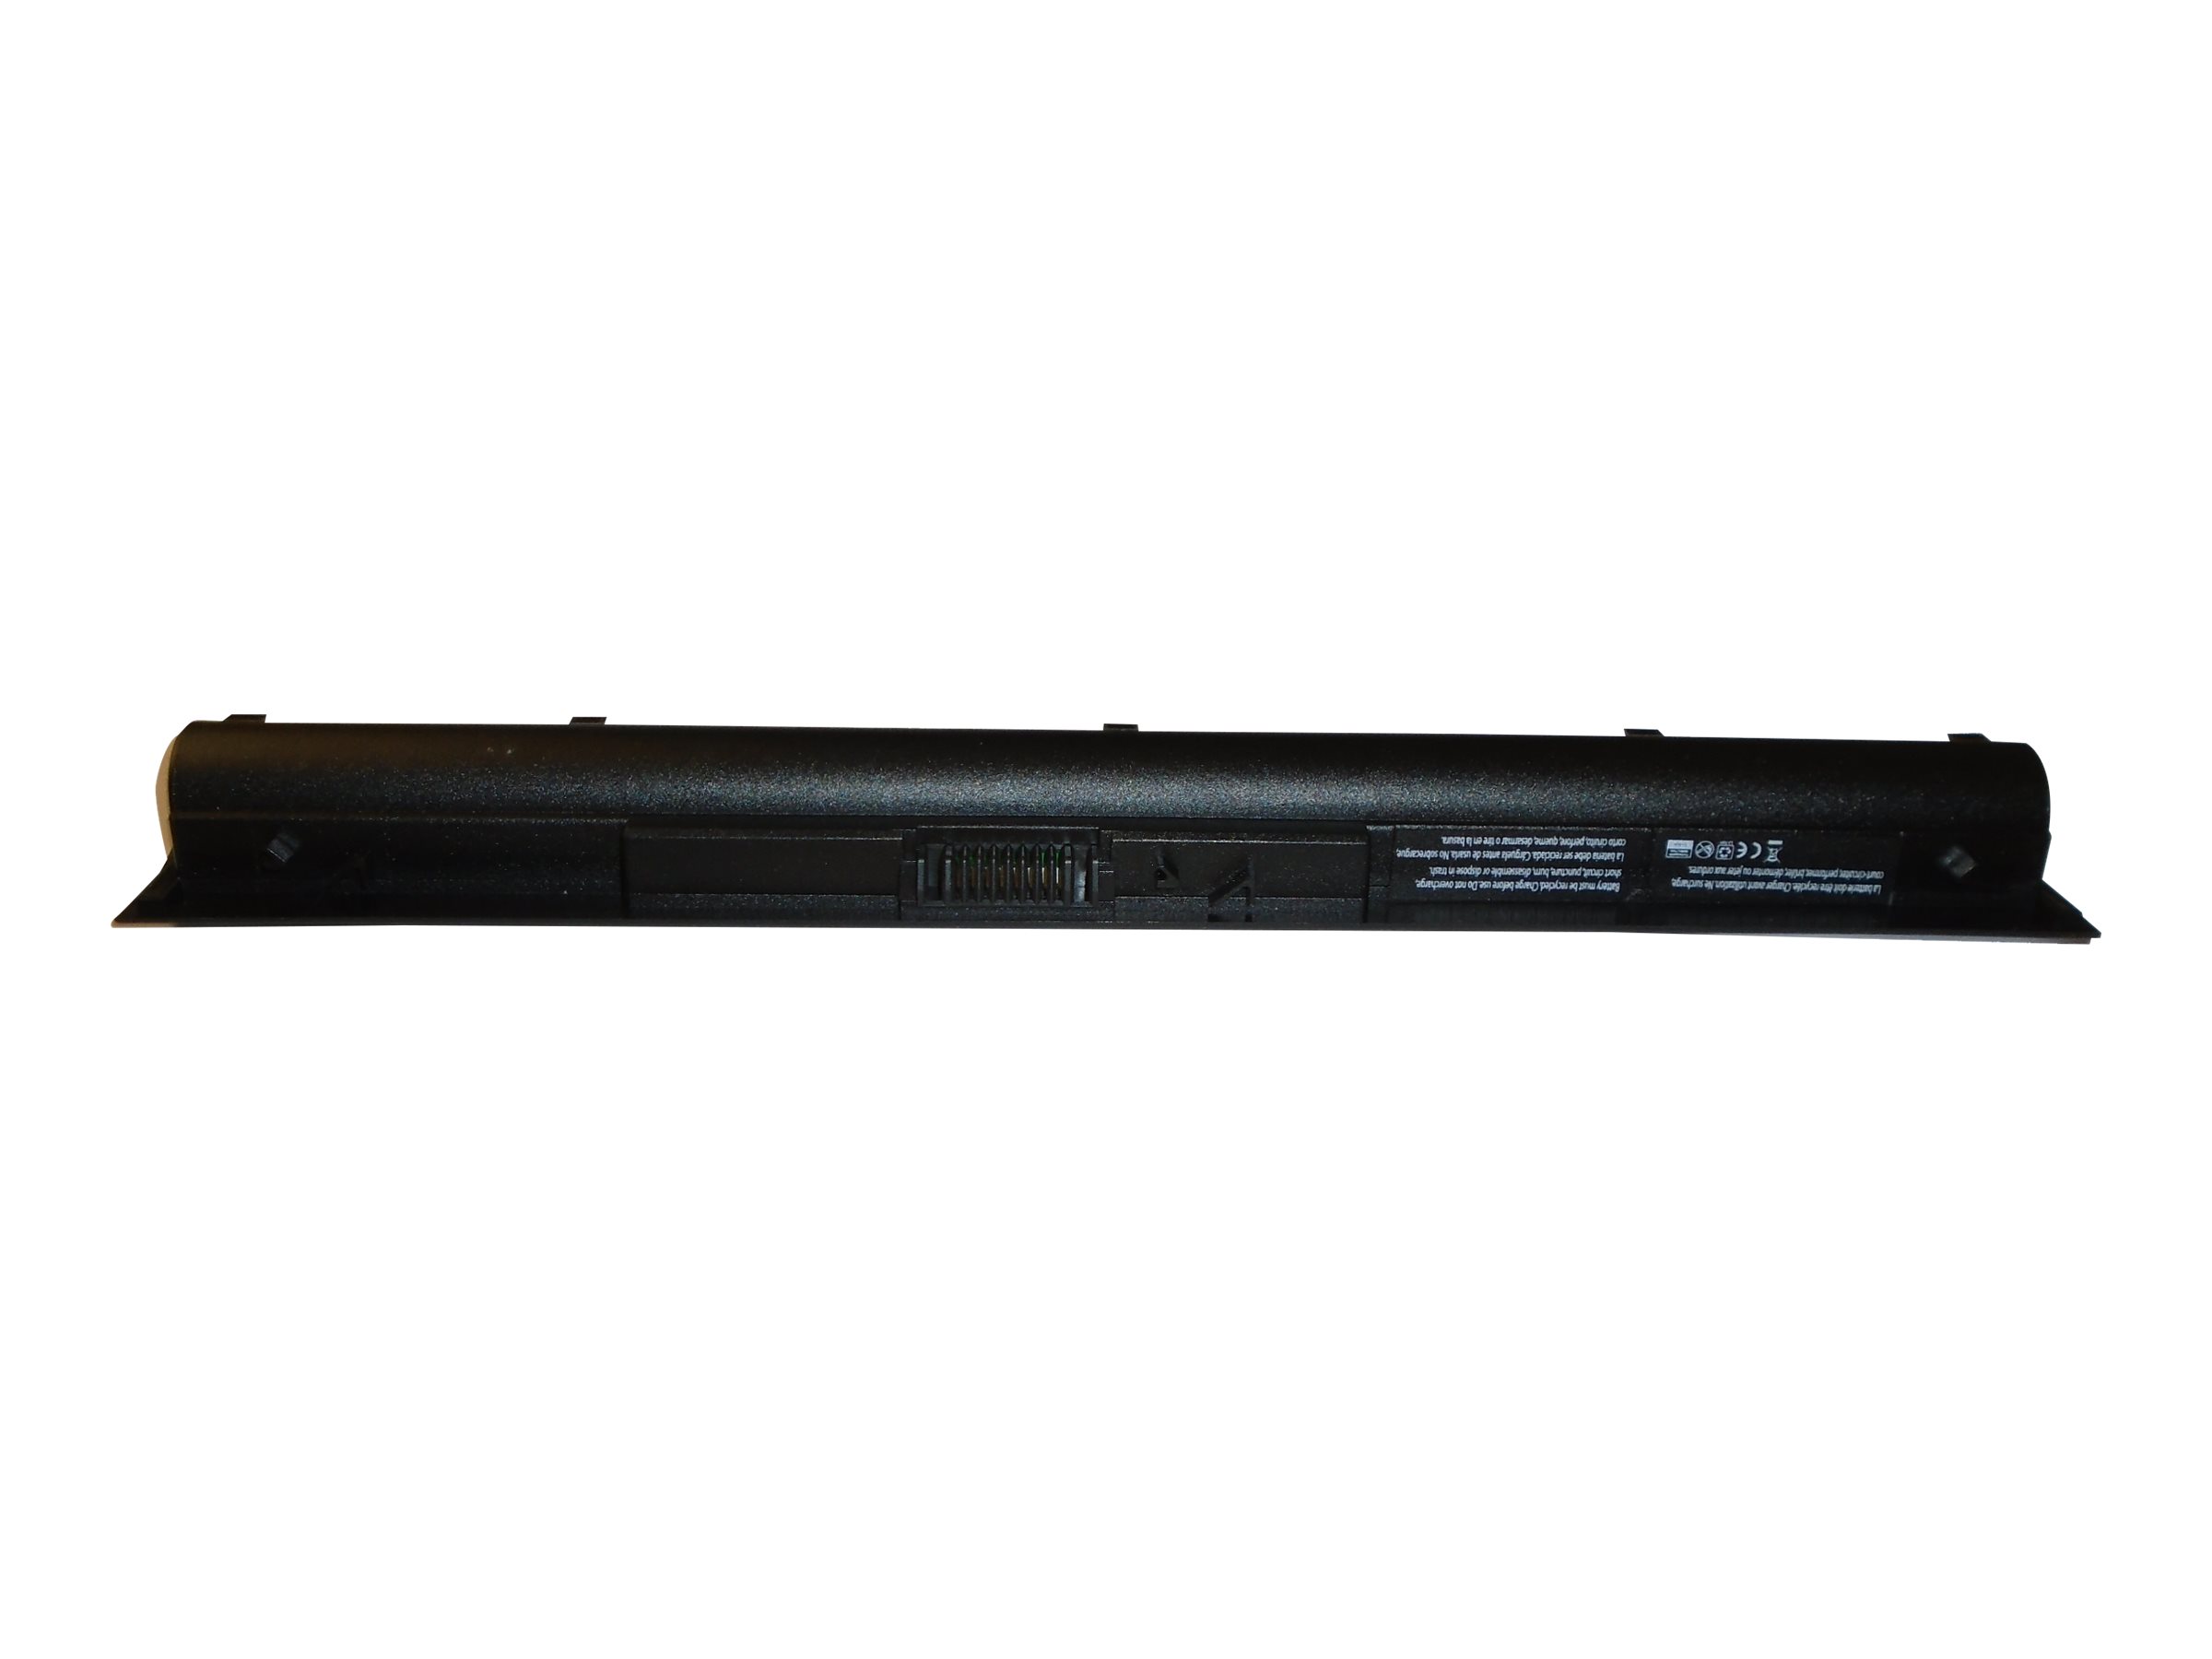 V7 - Laptop-Batterie (gleichwertig mit: HP 800049-001, HP KI04) - Lithium-Ionen - 4 Zellen - 2800 mAh - fr HP Pavilion Laptop 1